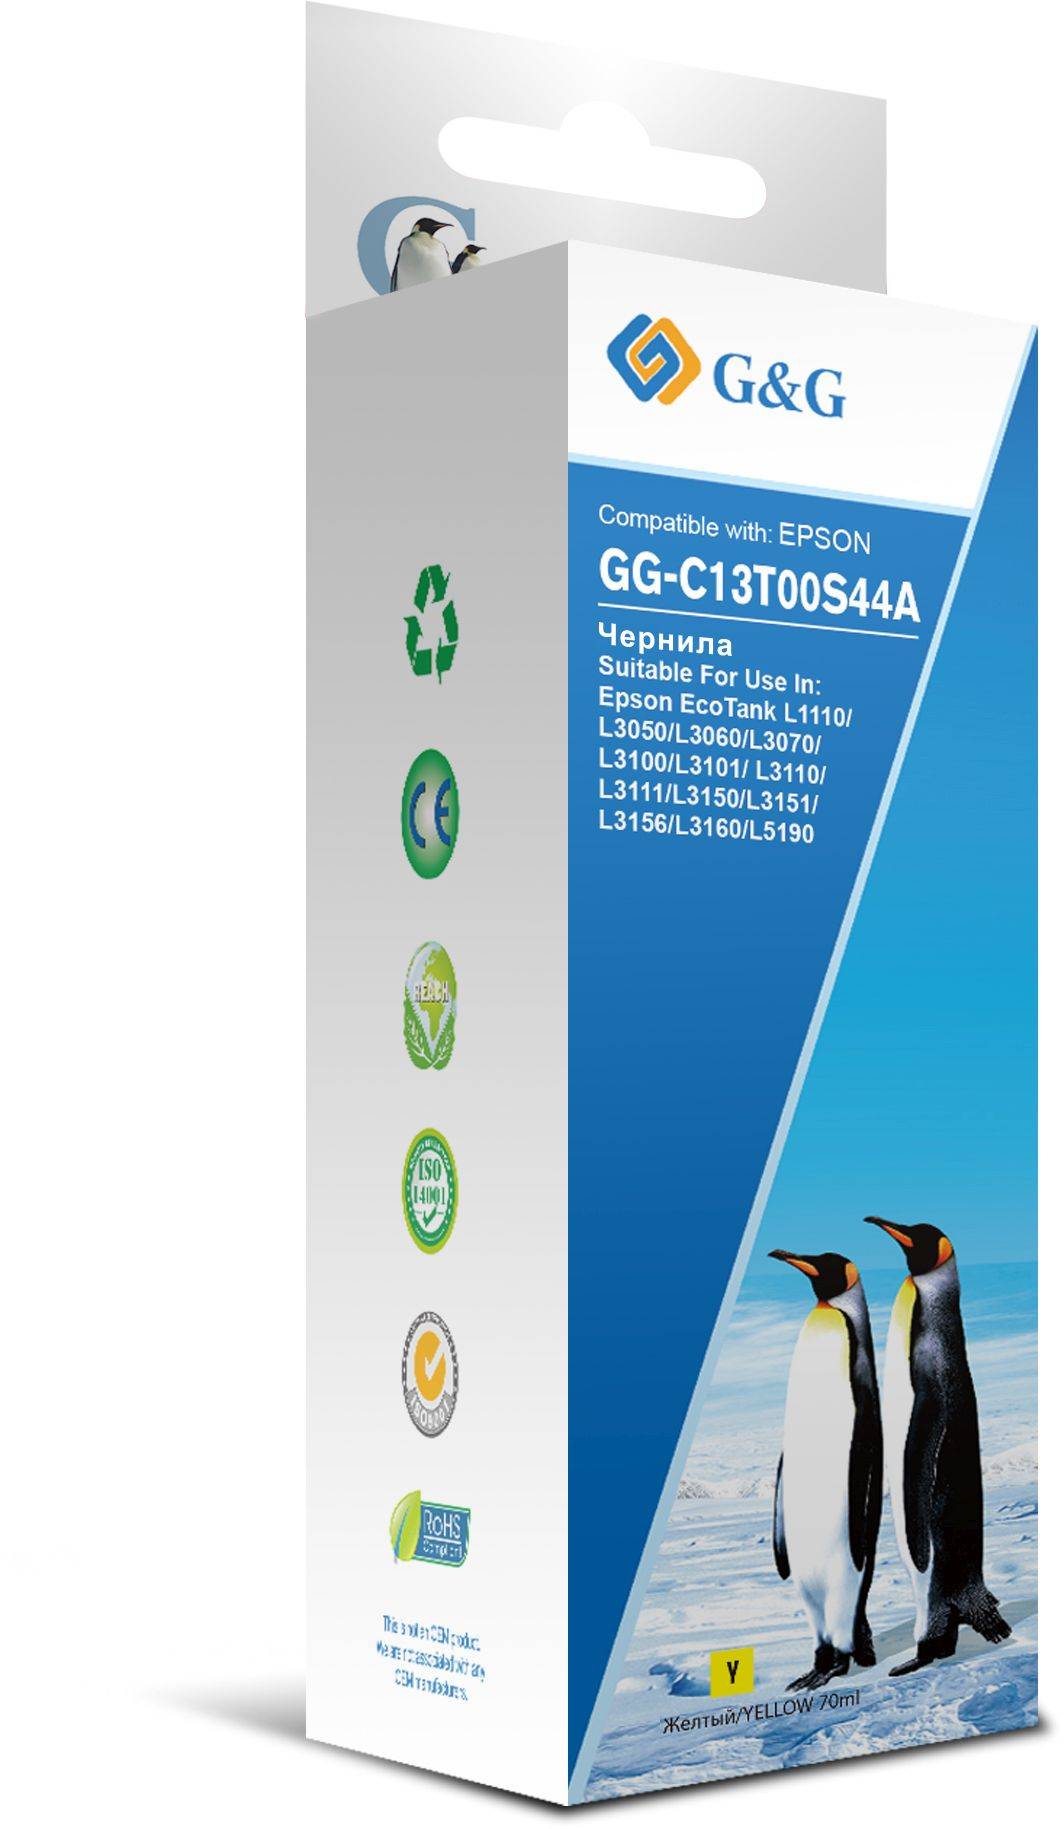 Чернила G&G GG-C13T00S44A 103Y желтый фл. 70мл для L1110, L3151, L3100, L3101, L3110, L3150